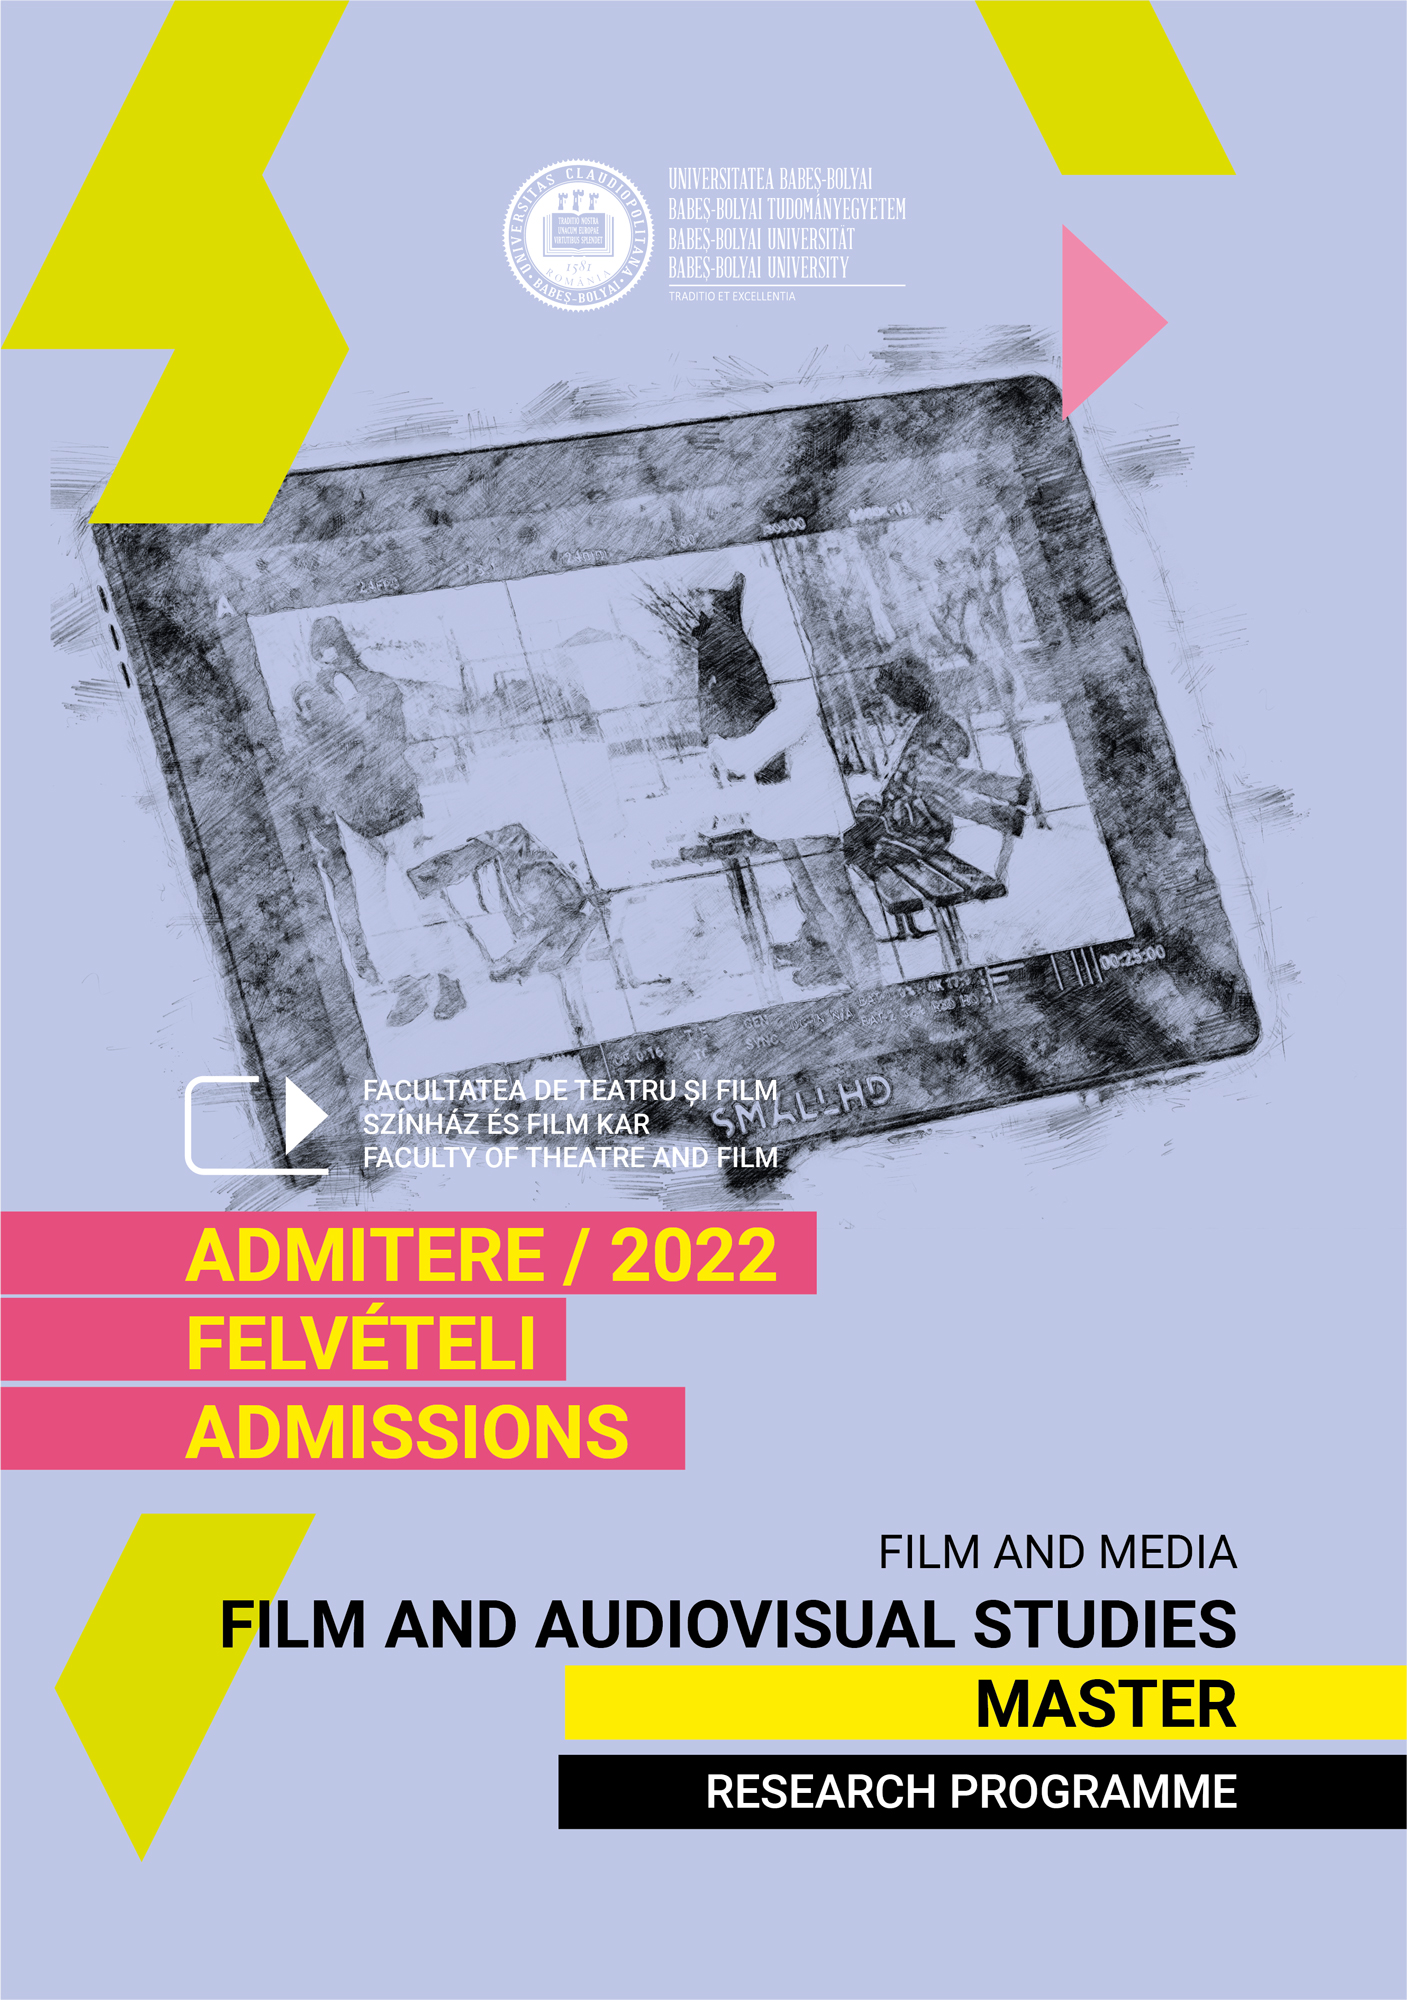 FTF-ADMITERE-FILM AND AUDIOVISUAL STUDIES